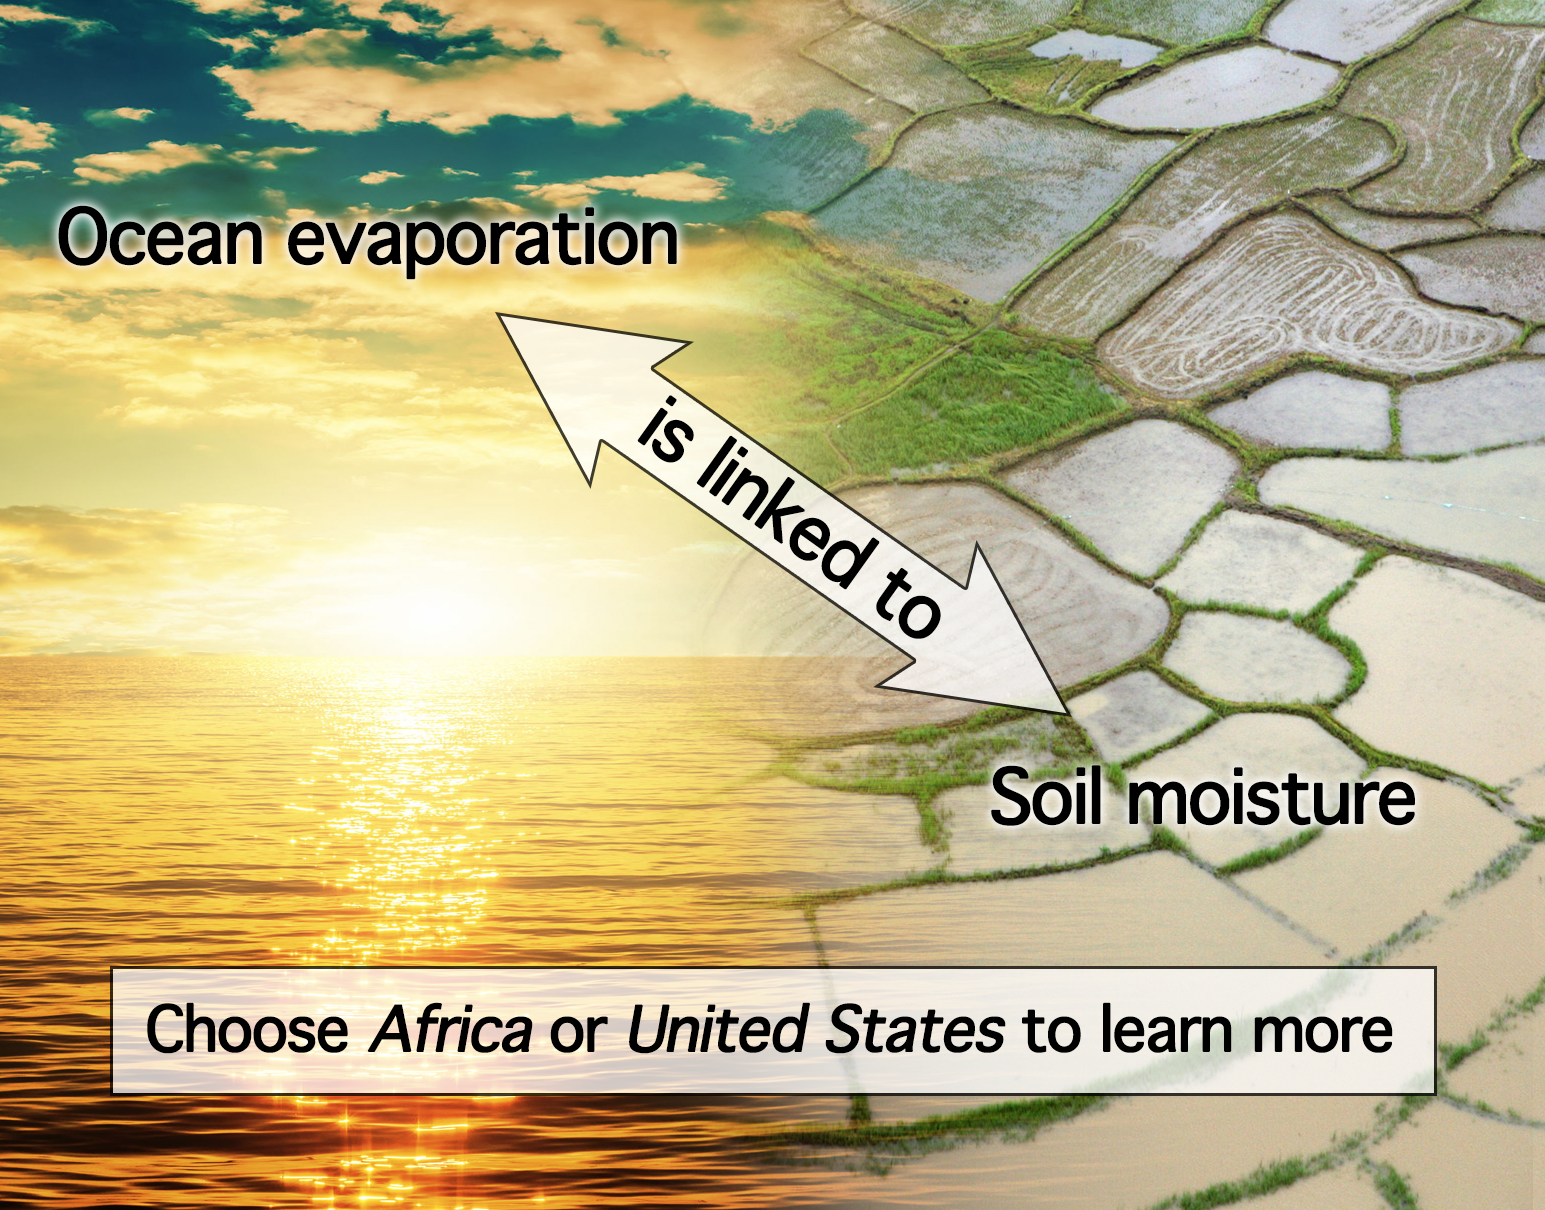 Ocean evaporation - soil moisture diagram